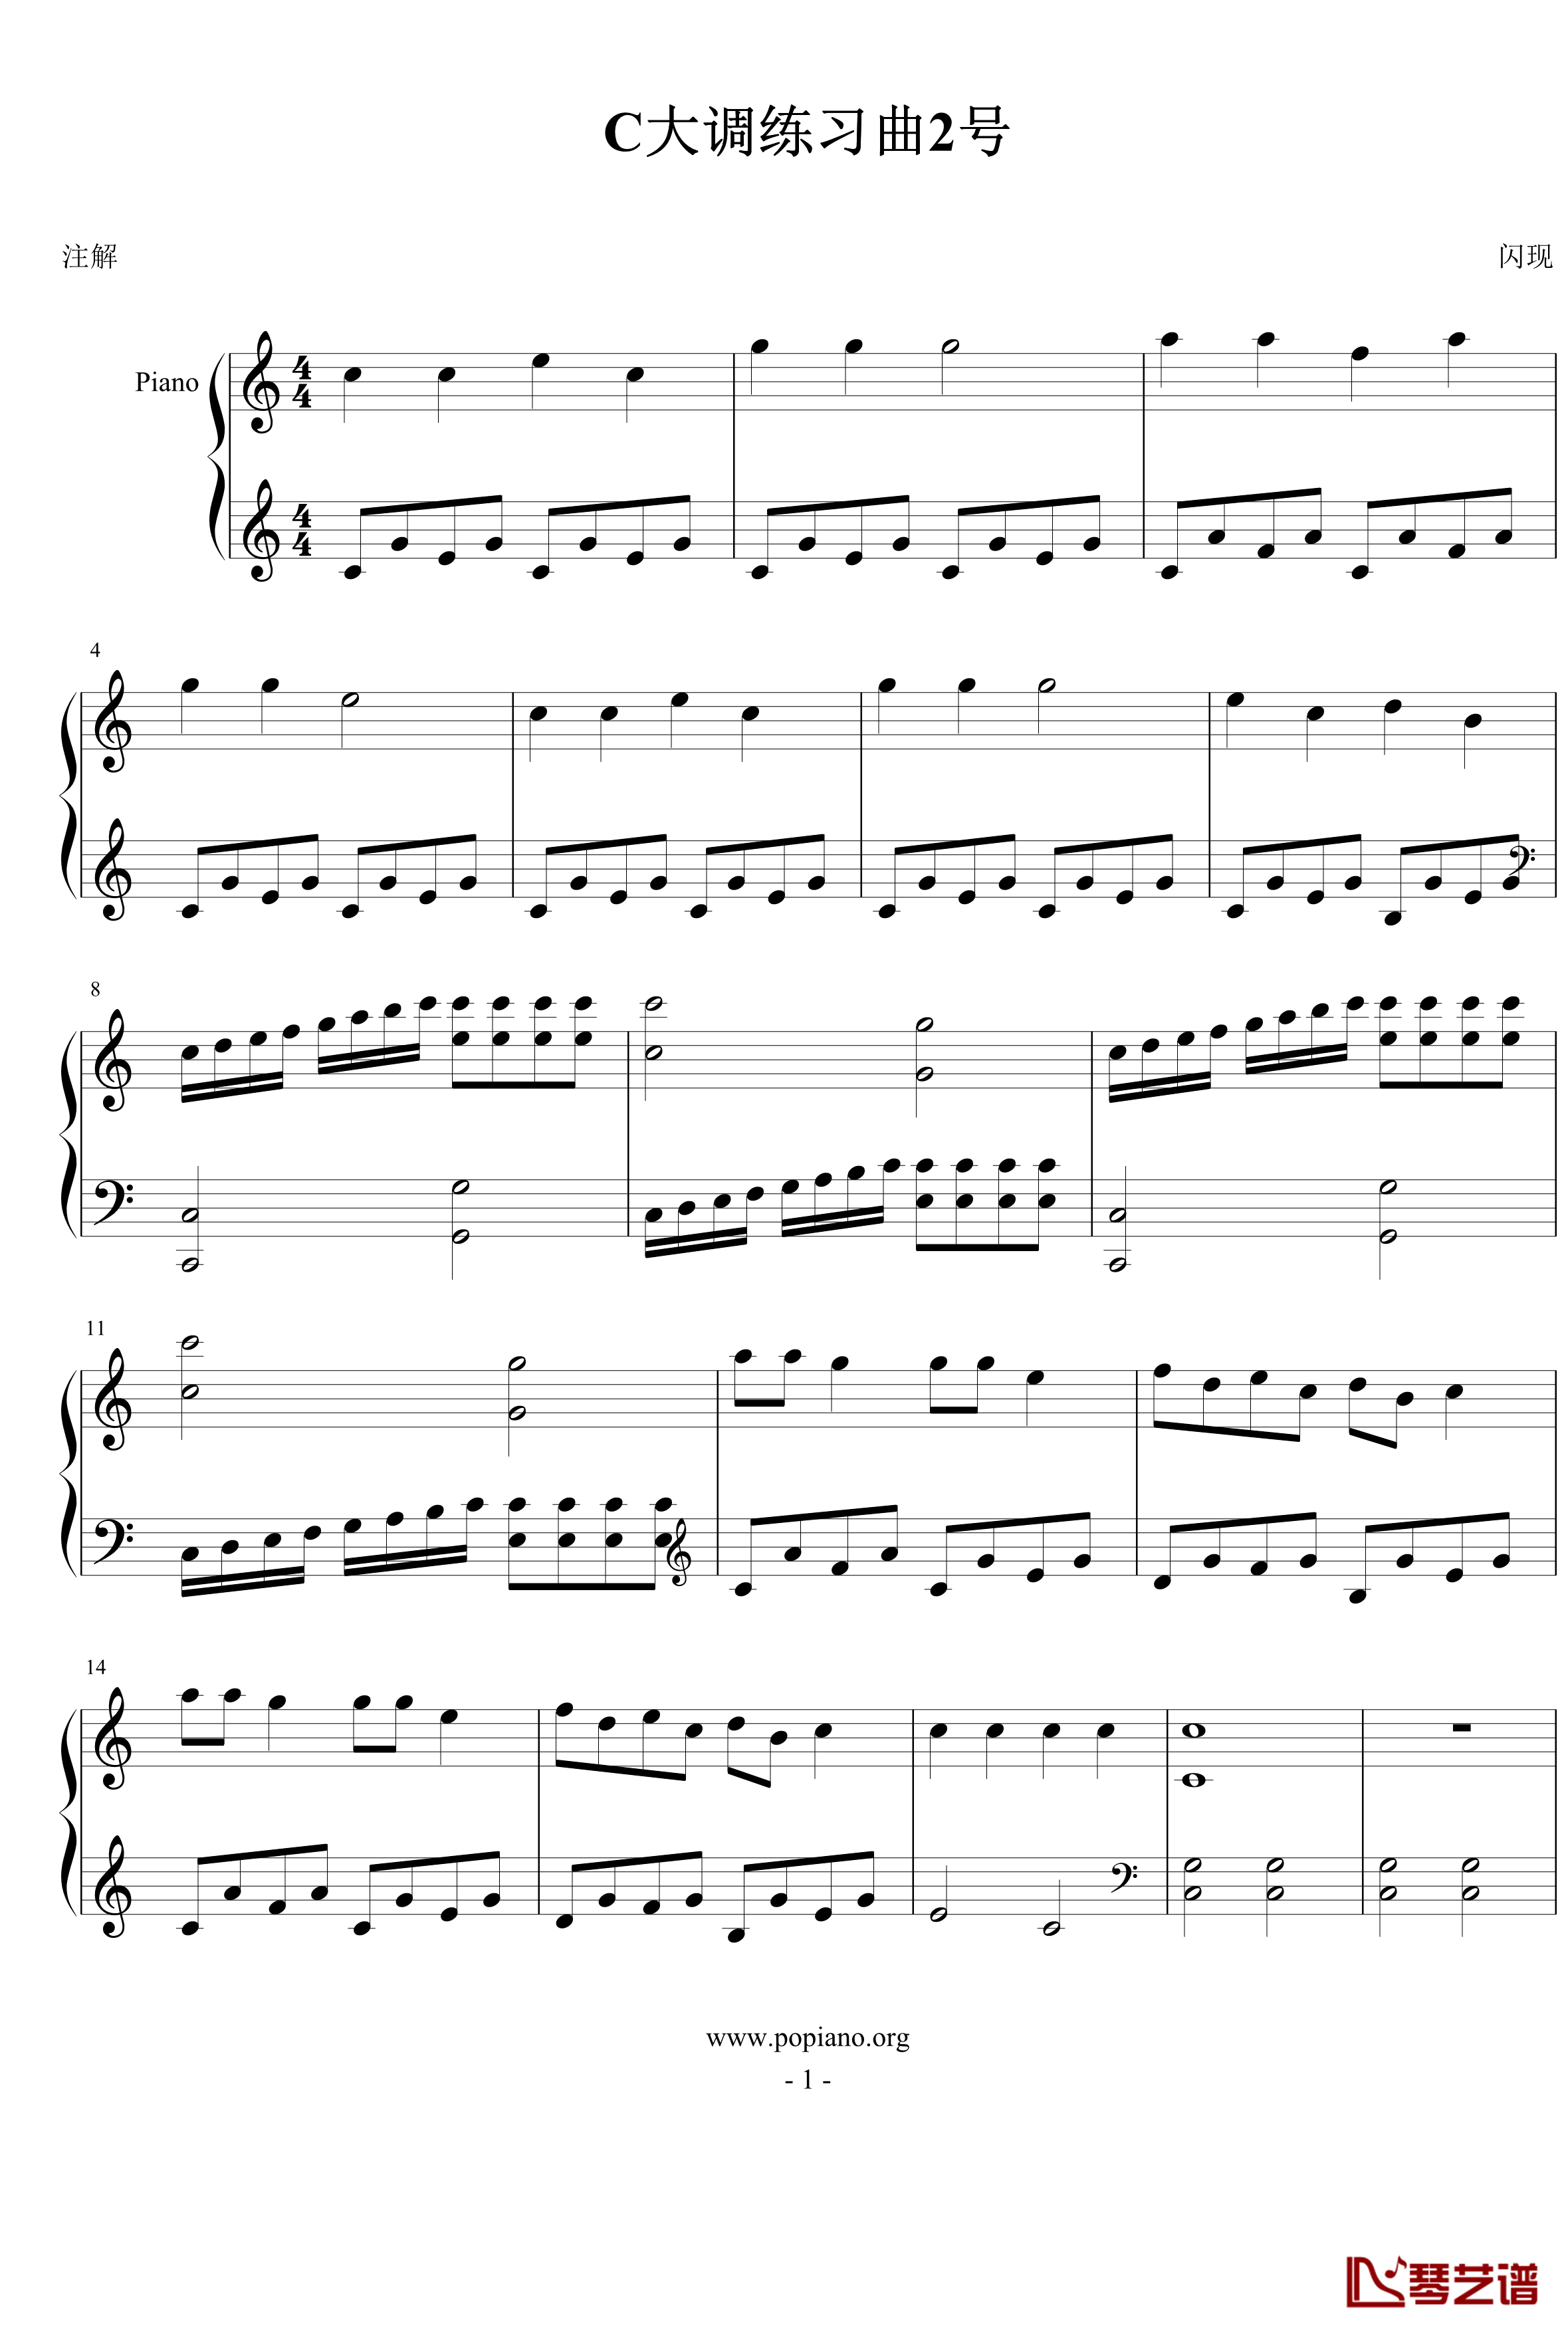 C大调练习曲2号钢琴谱-zhangjie0123471